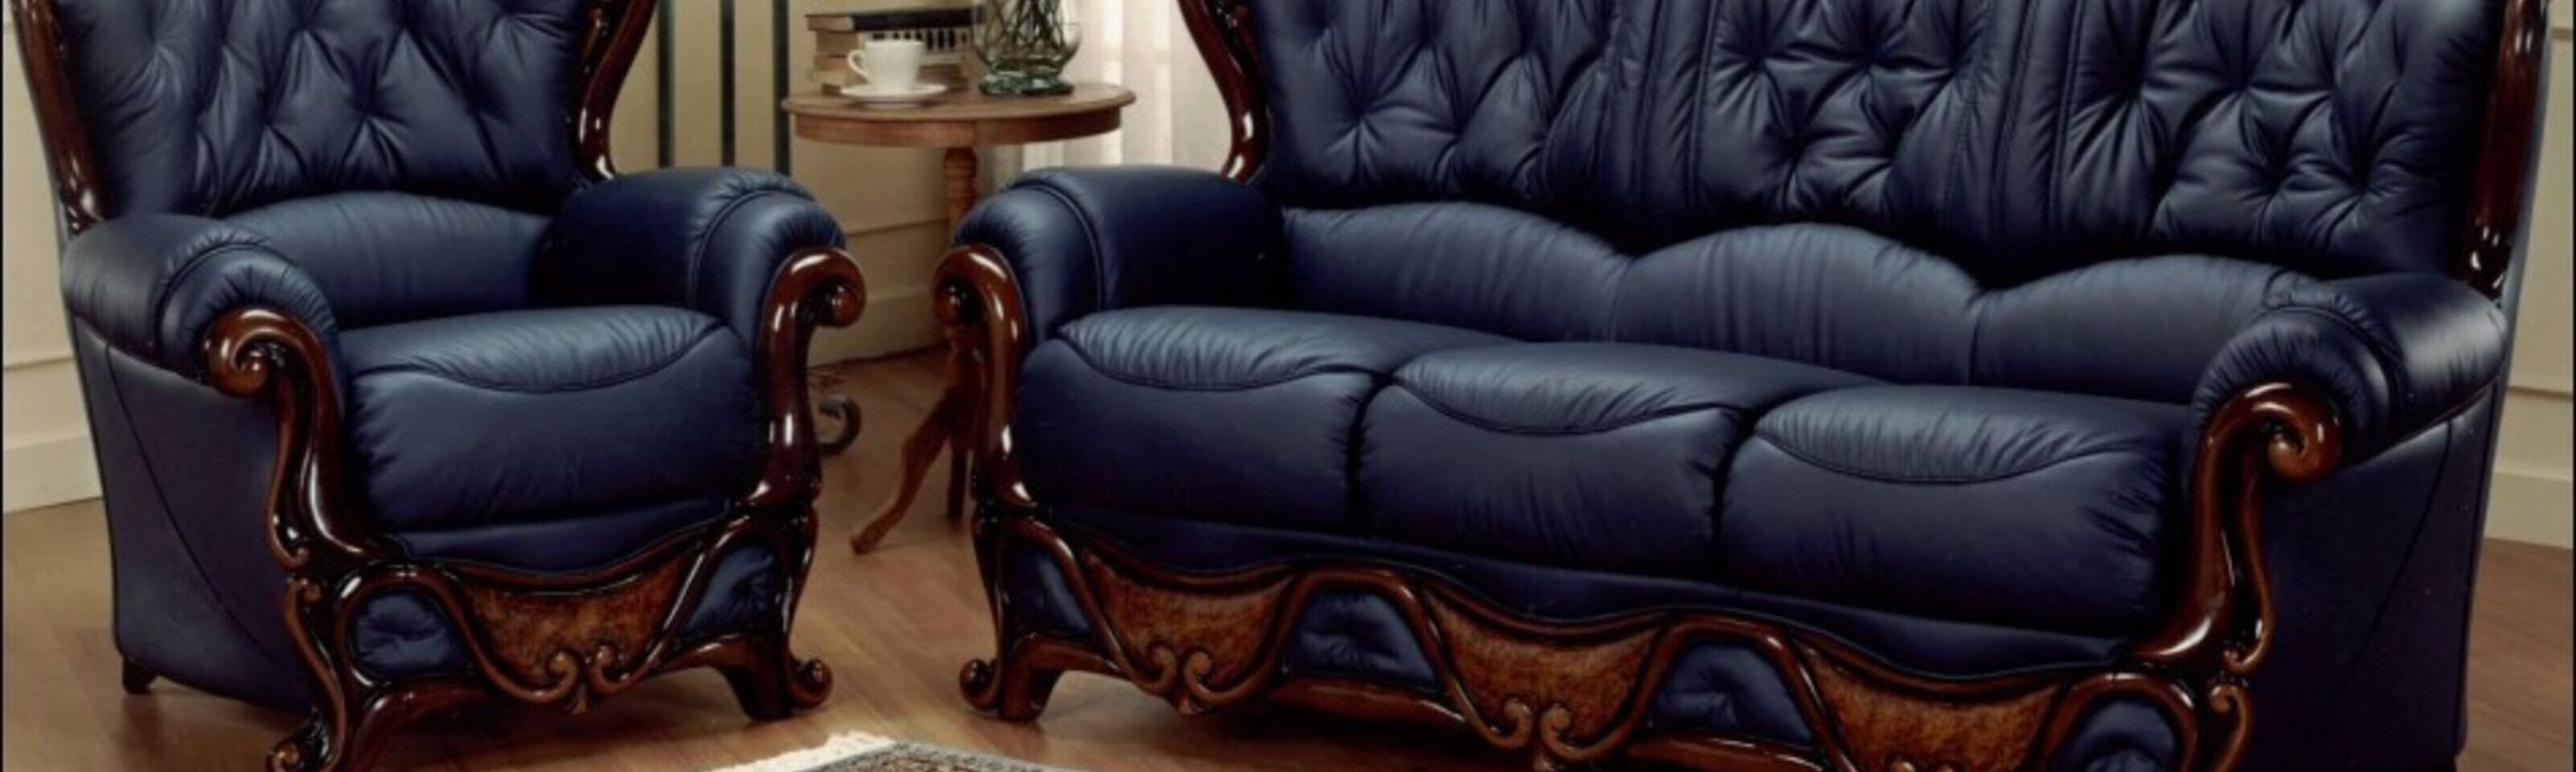 Dante 3 Seater + Armchair Italian Leather Sofa Settee Offer Blue